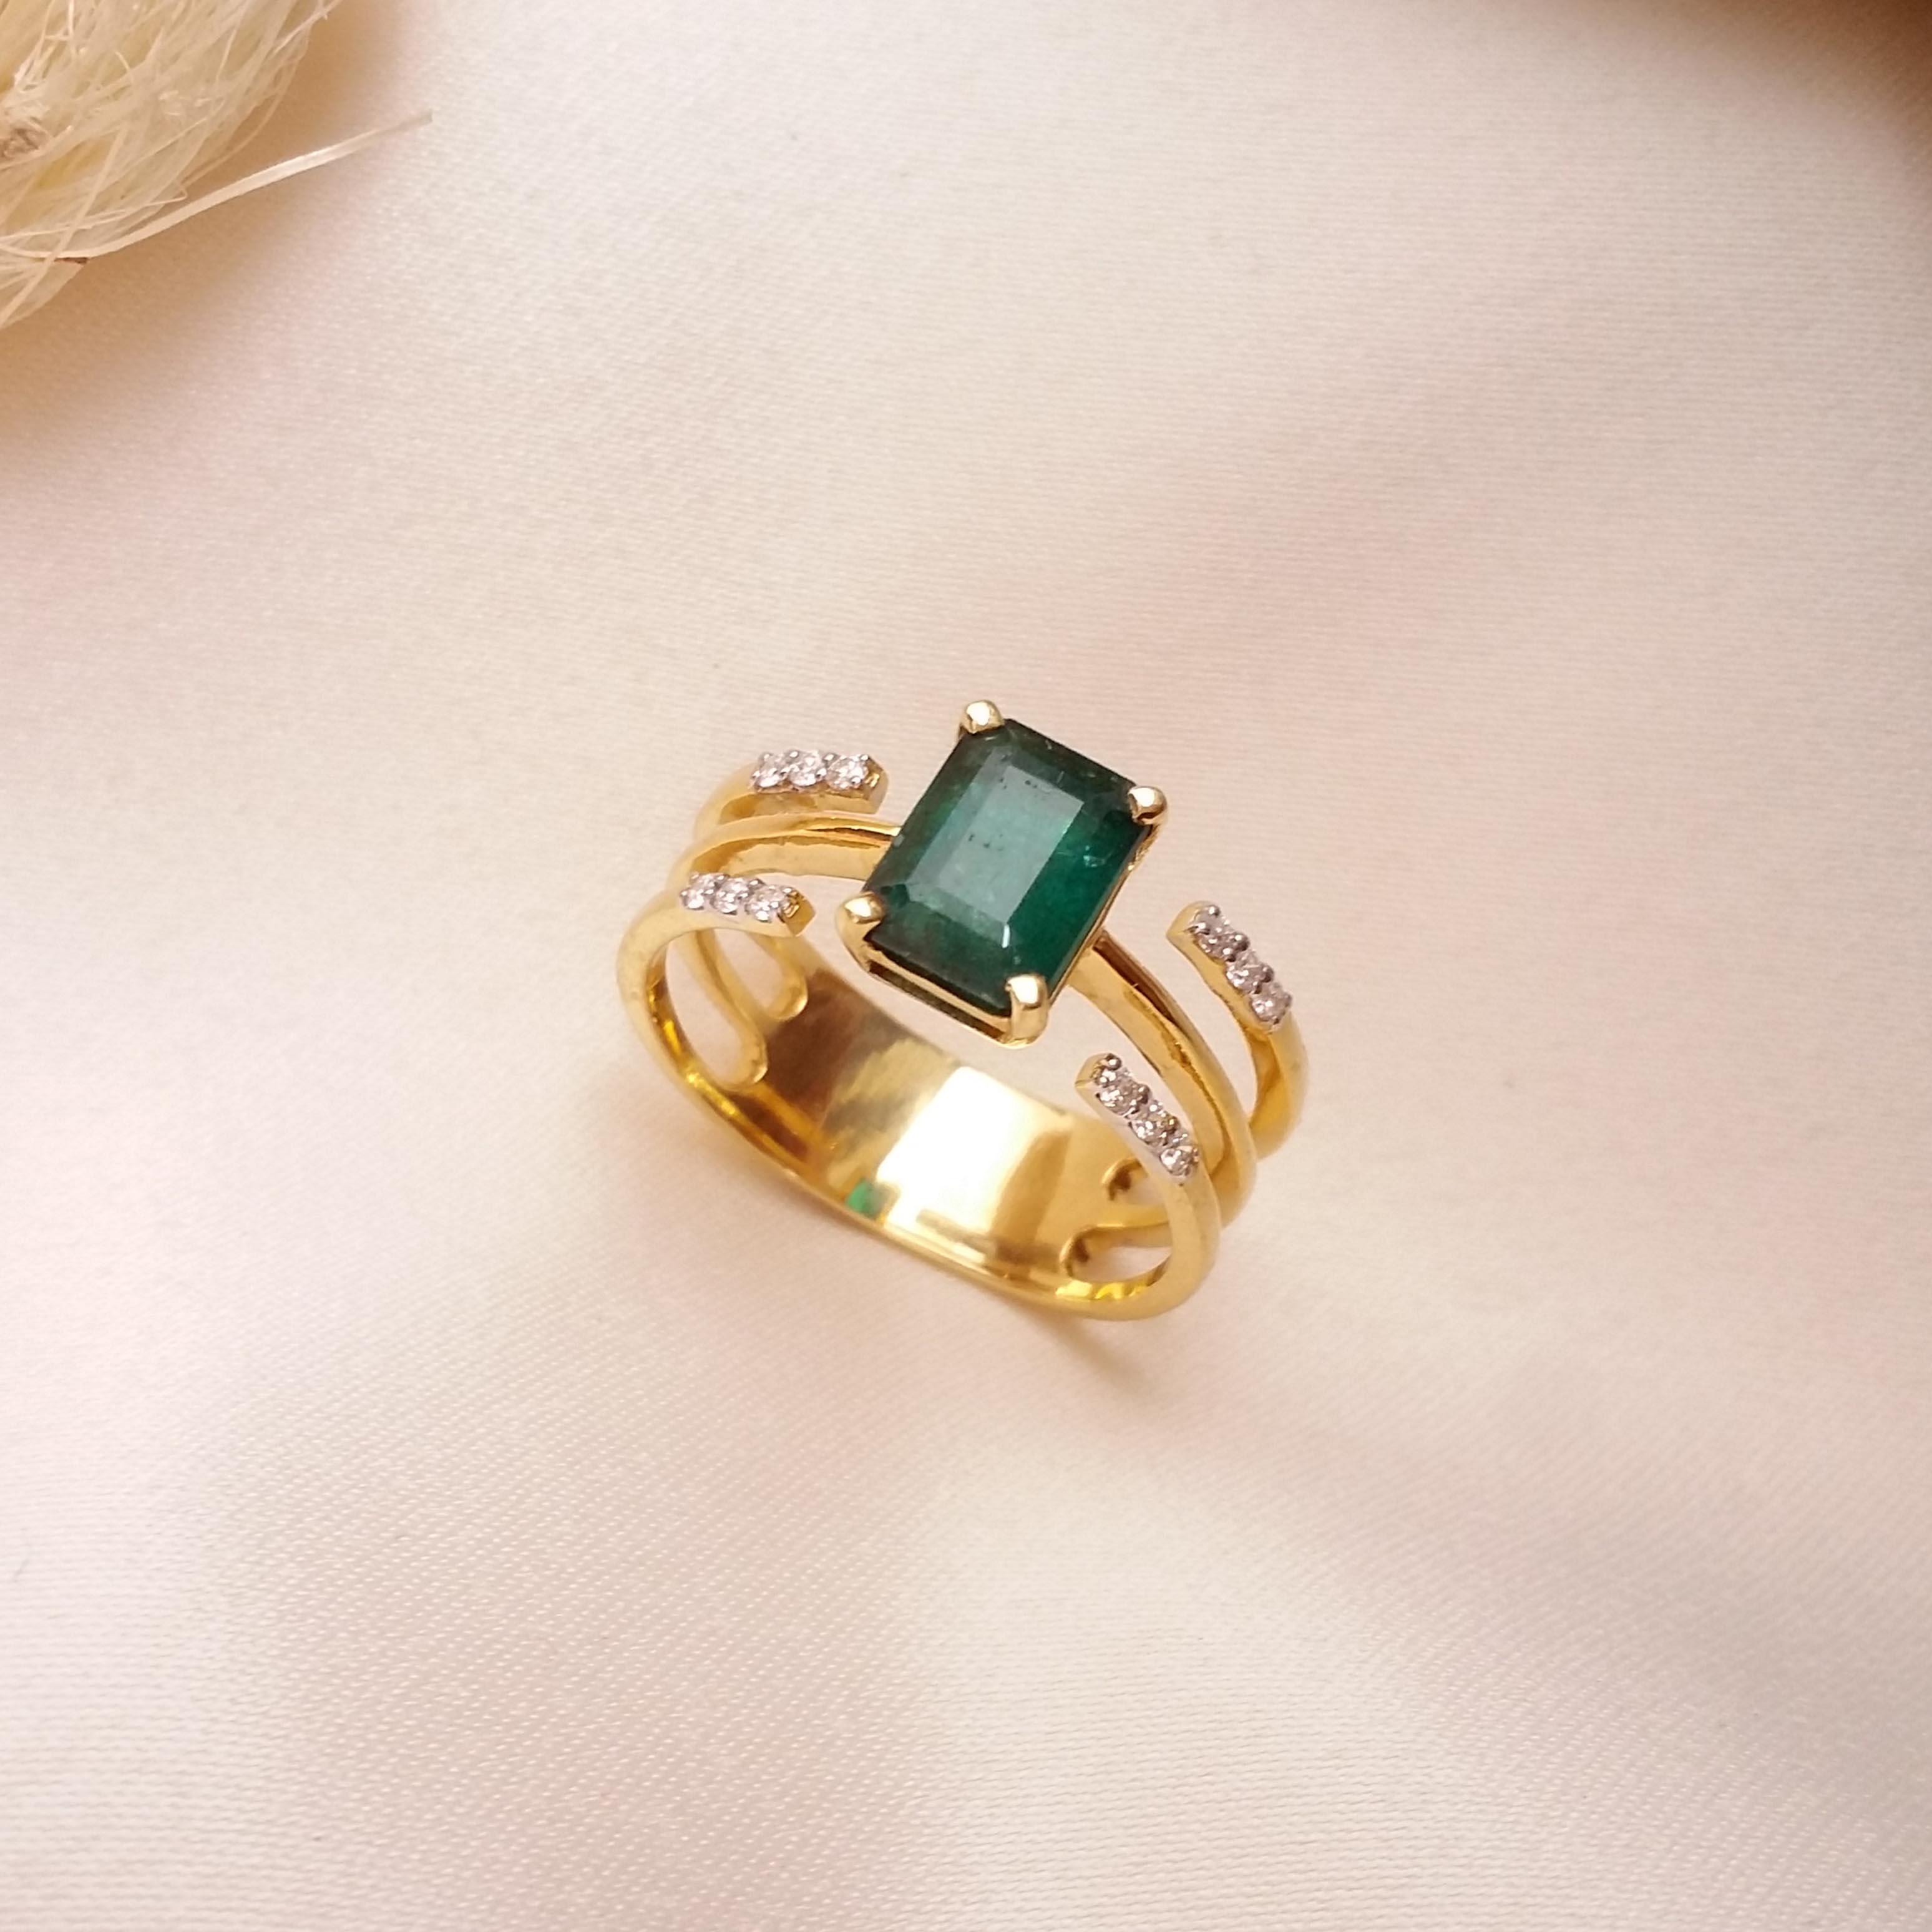 Antique Edwardian Emerald Diamond Engagement Ring - Antique Jewelry |  Vintage Rings | Faberge EggsAntique Jewelry | Vintage Rings | Faberge Eggs